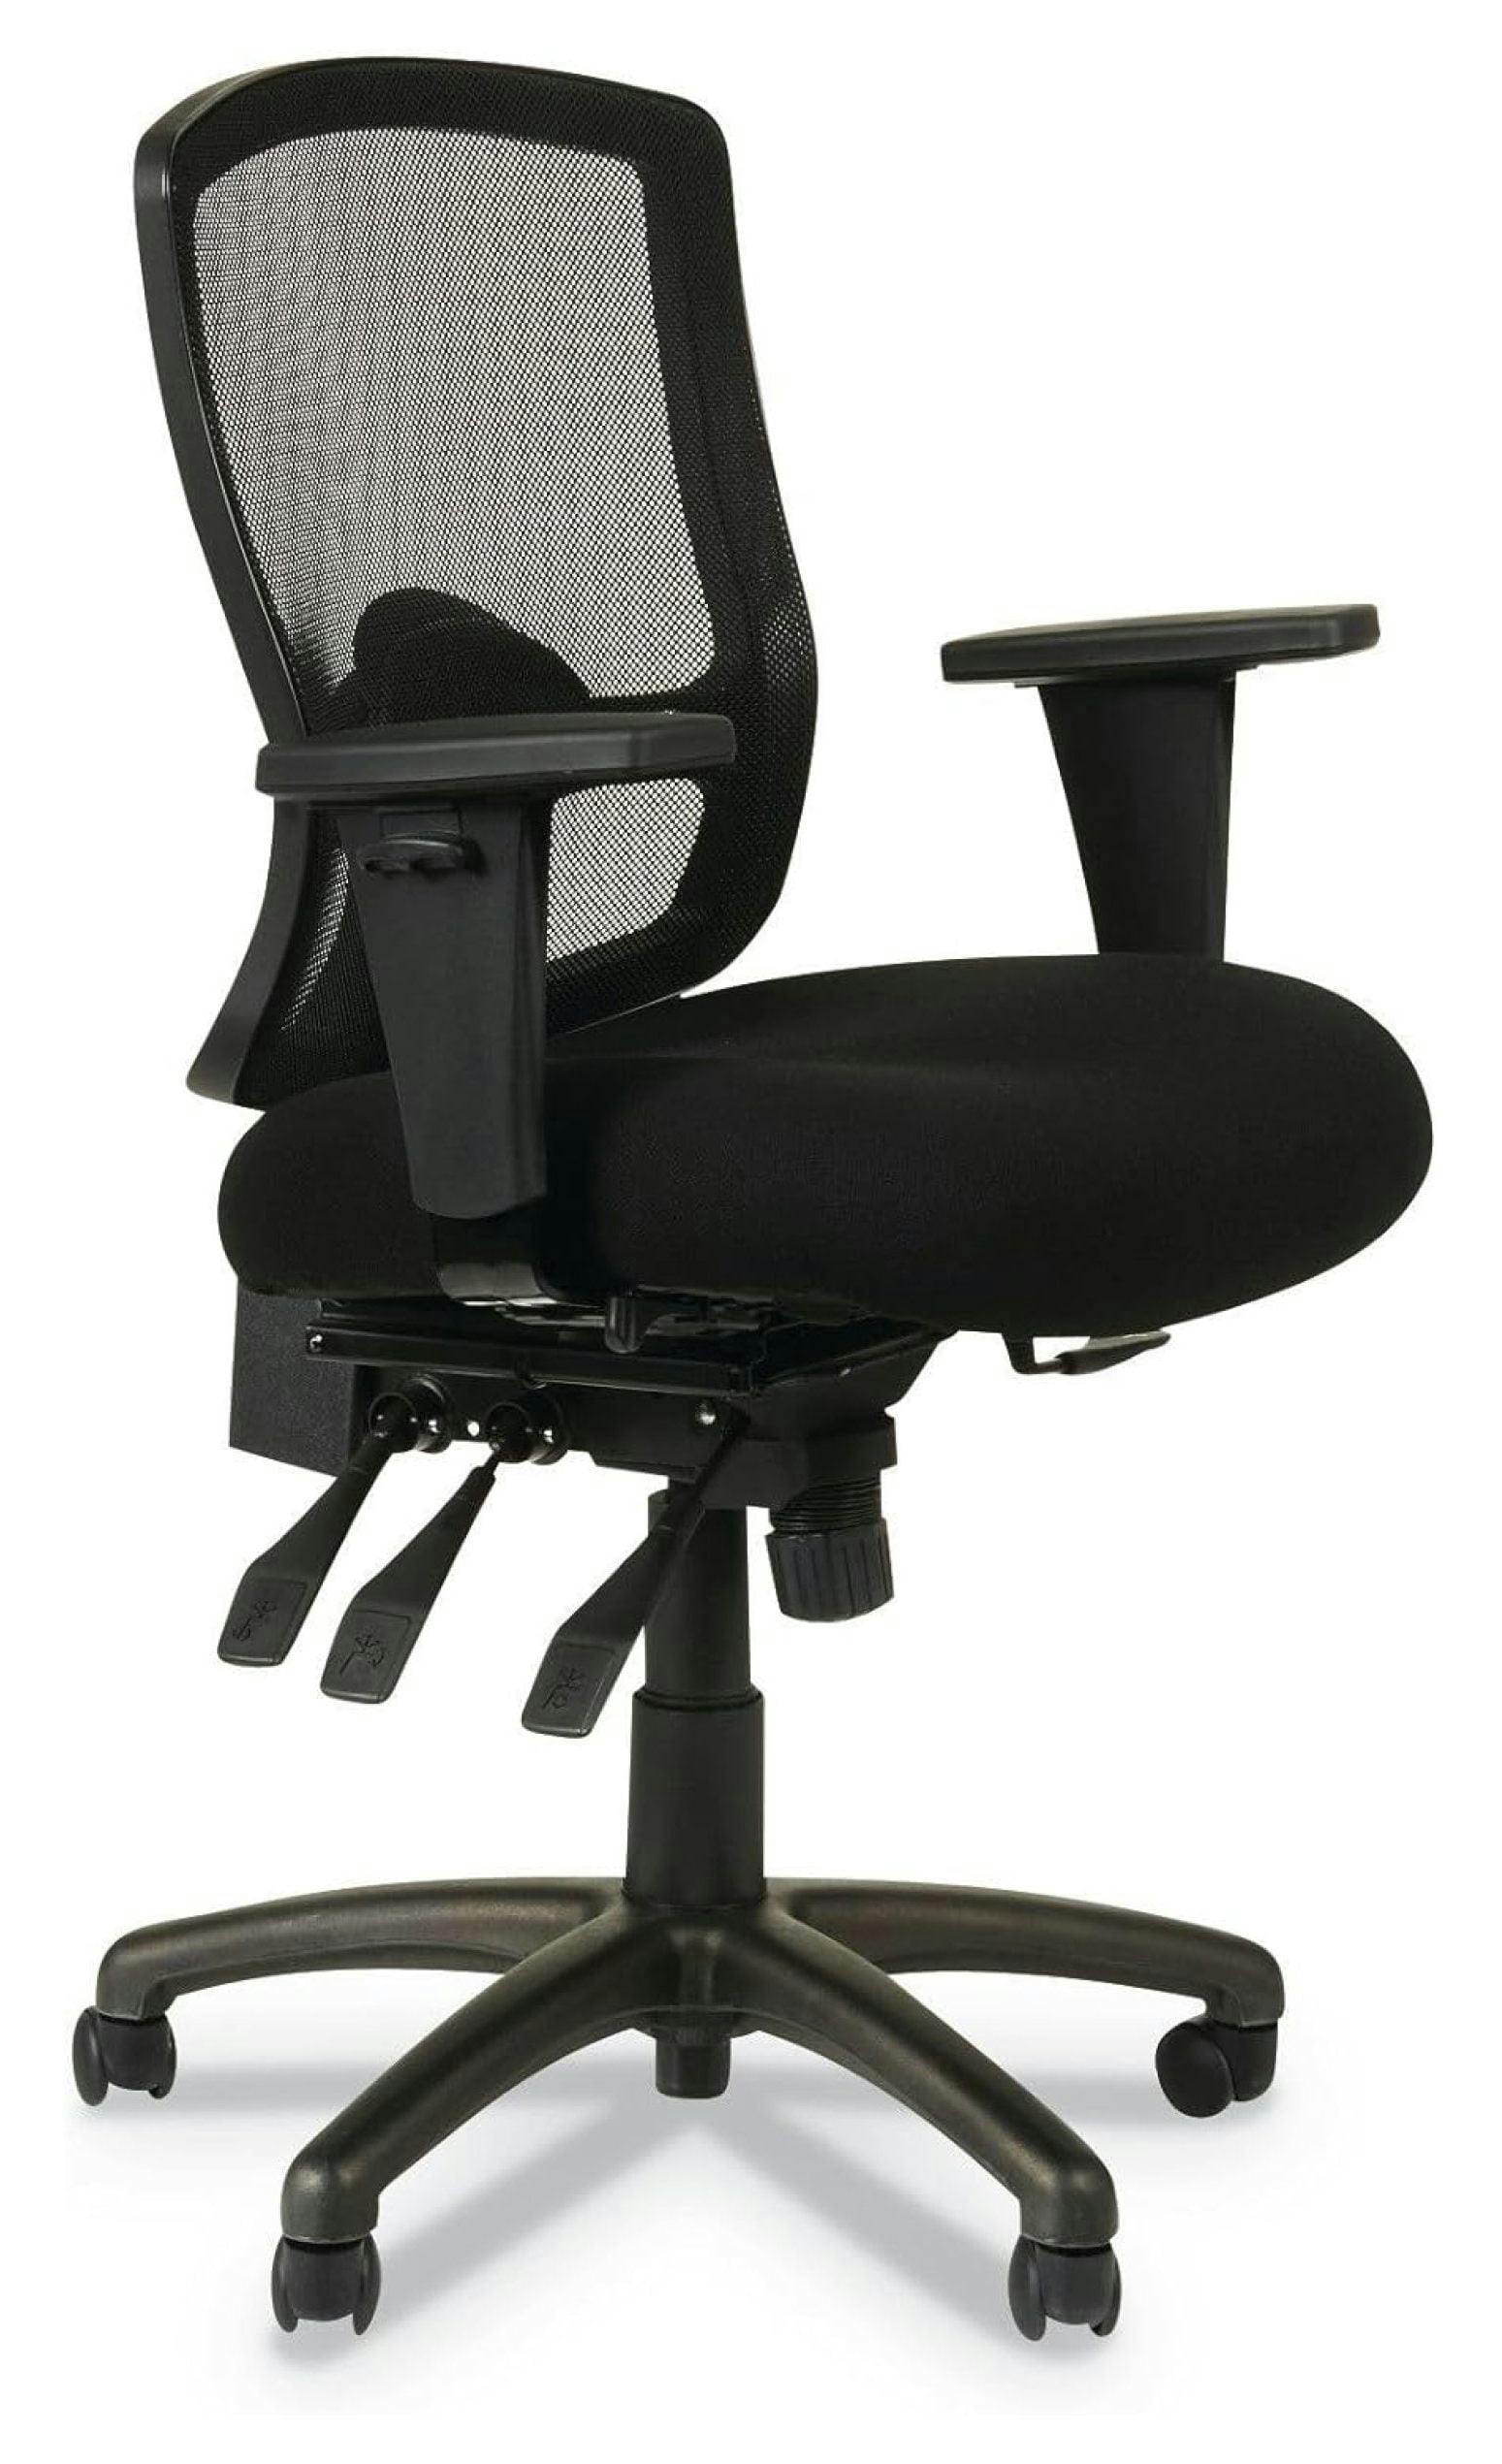 Adjustable Ergonomic Mesh Office Chair with Tilt and Swivel, Black